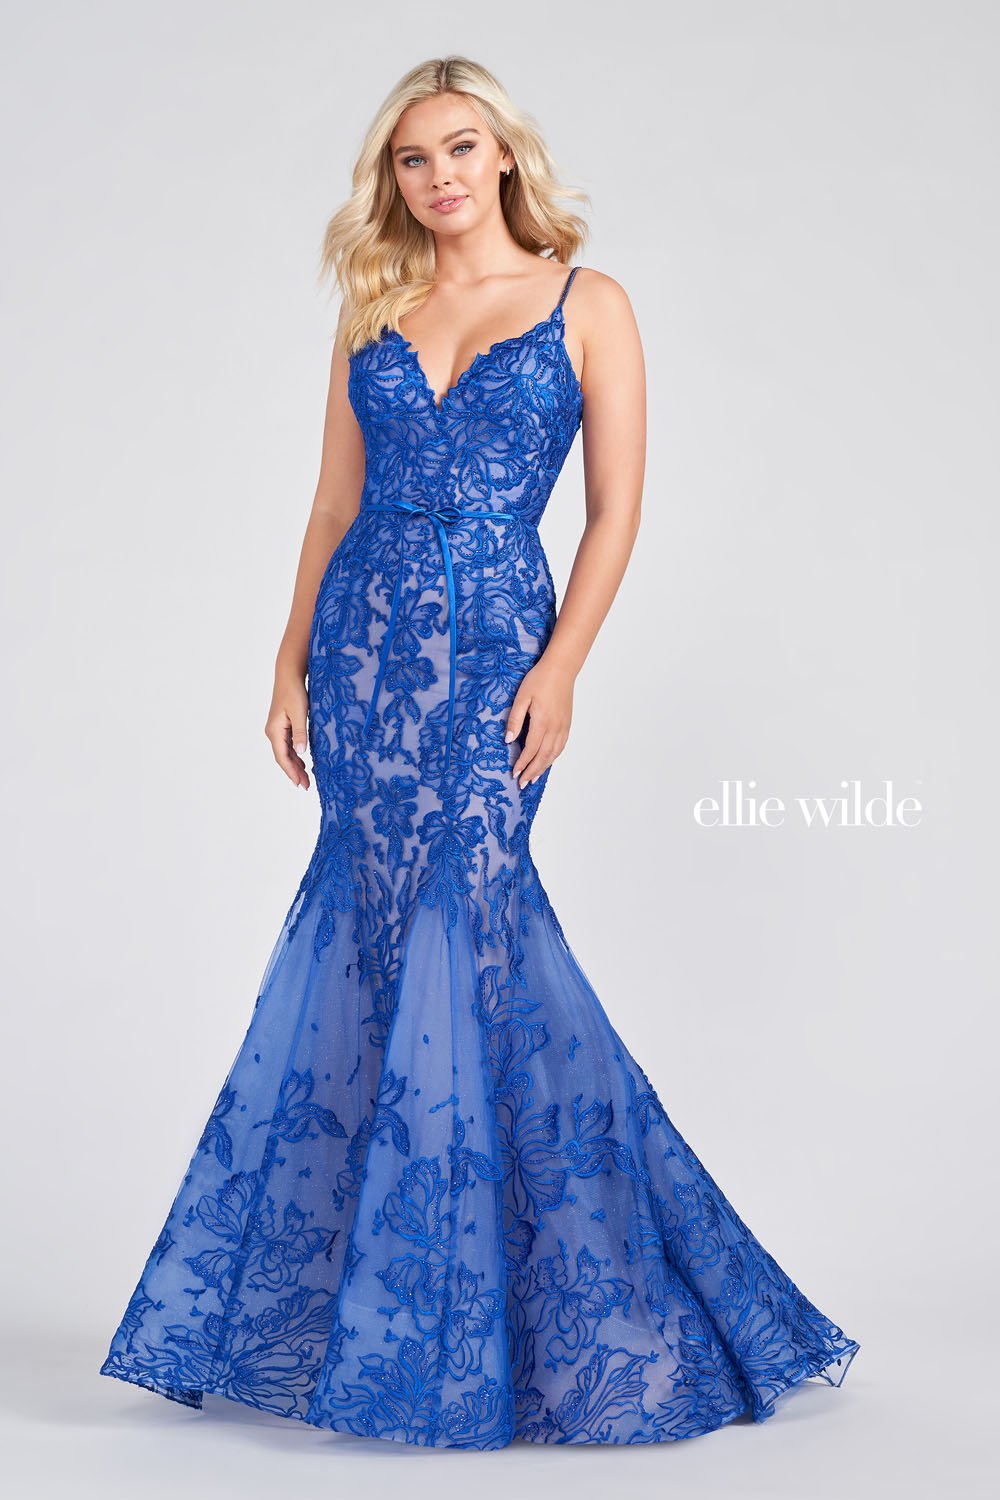 Ellie Wilde Royal Blue Nude EW122017 Prom Dress Image.  Royal Blue Nude formal dress.